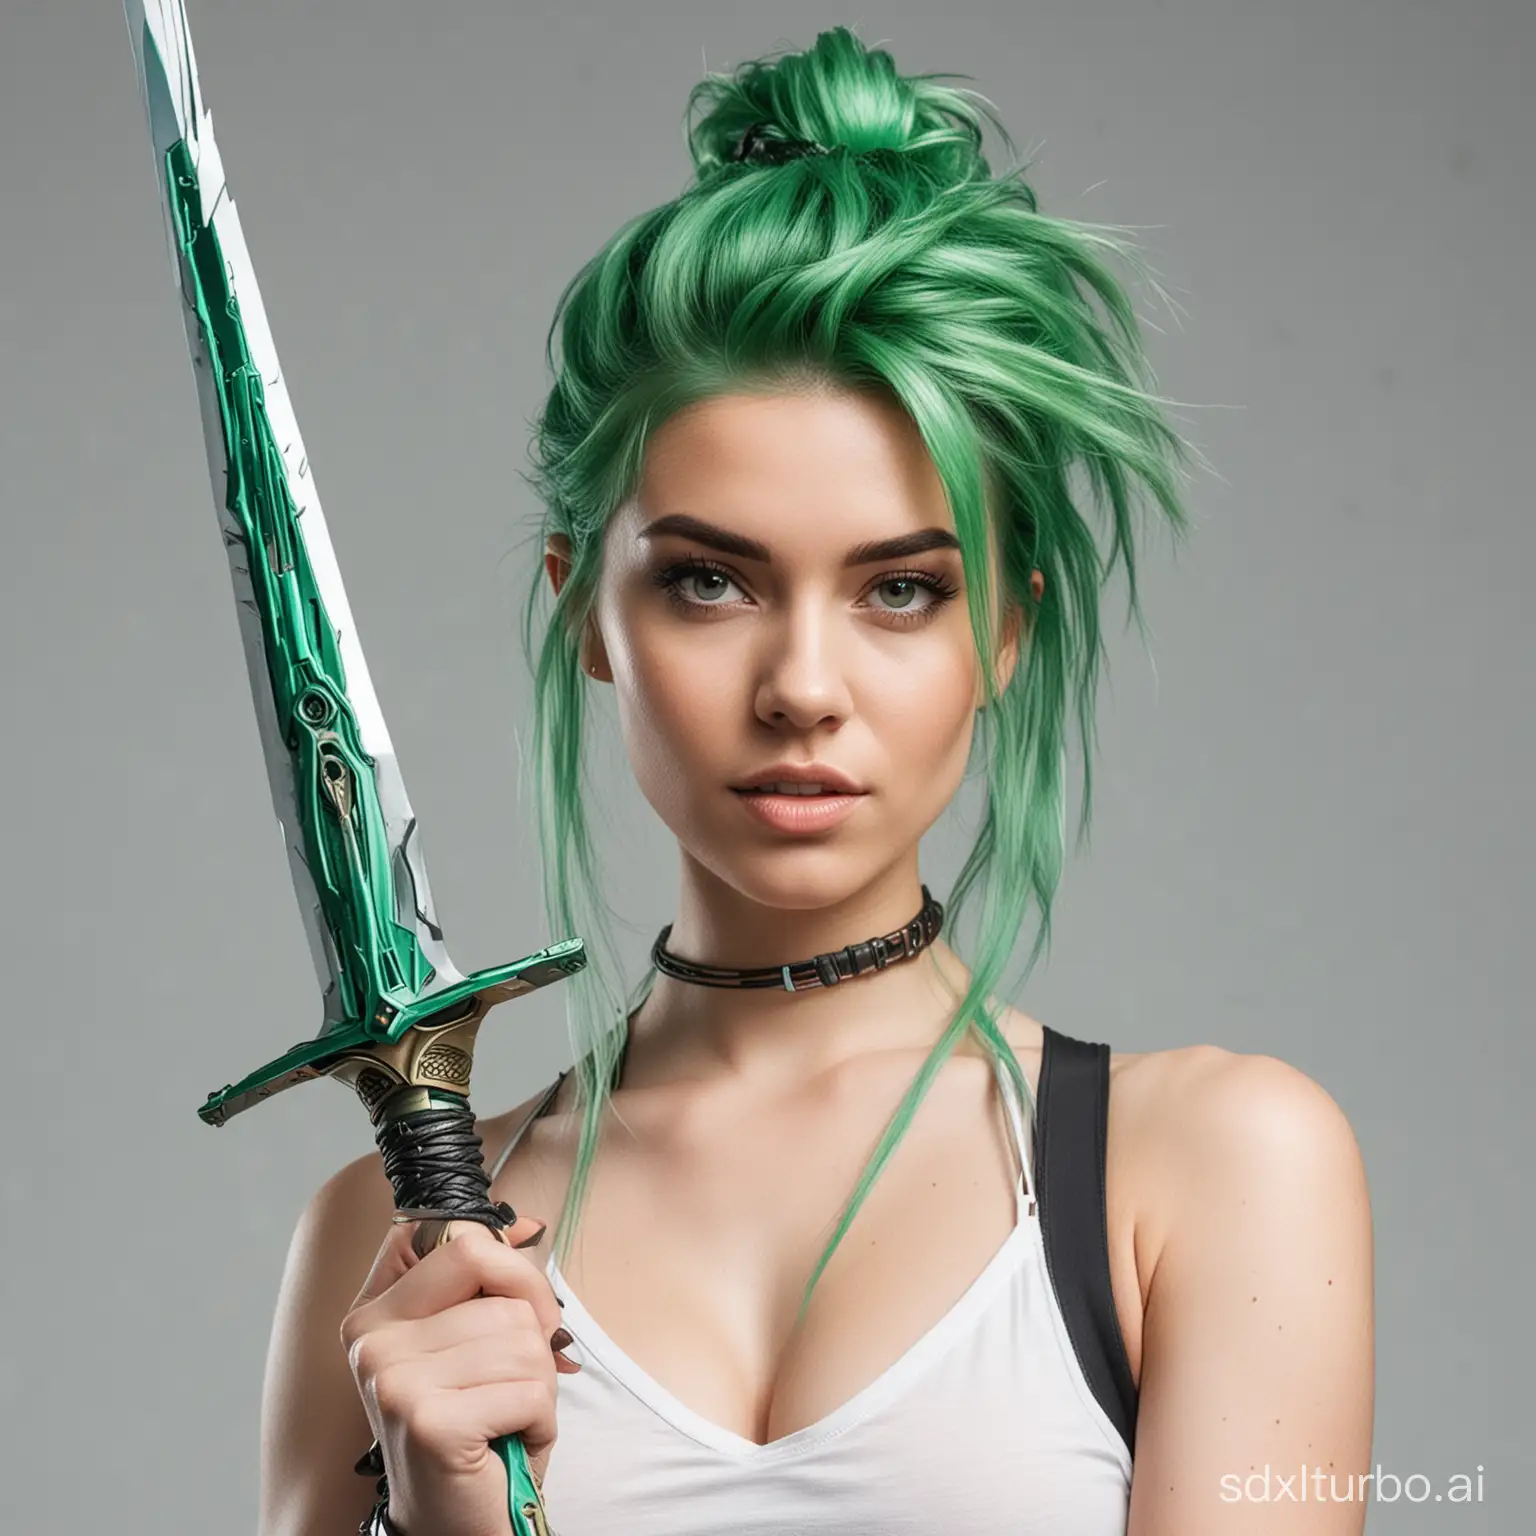 Futuristic-Swordwielding-Woman-with-Vibrant-Green-Hair